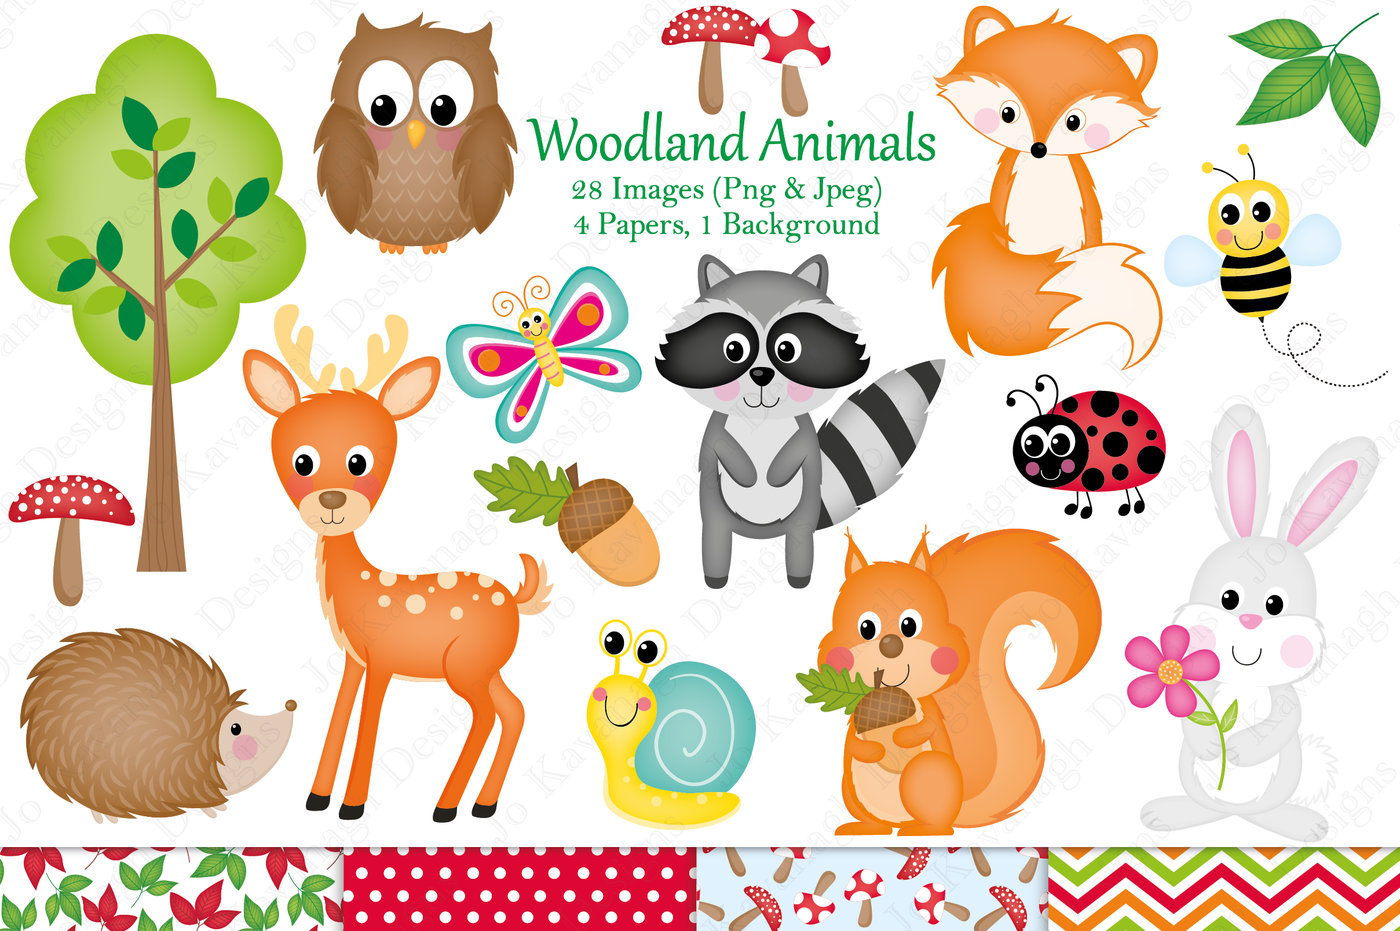 Woodland animals clipartwoodland.